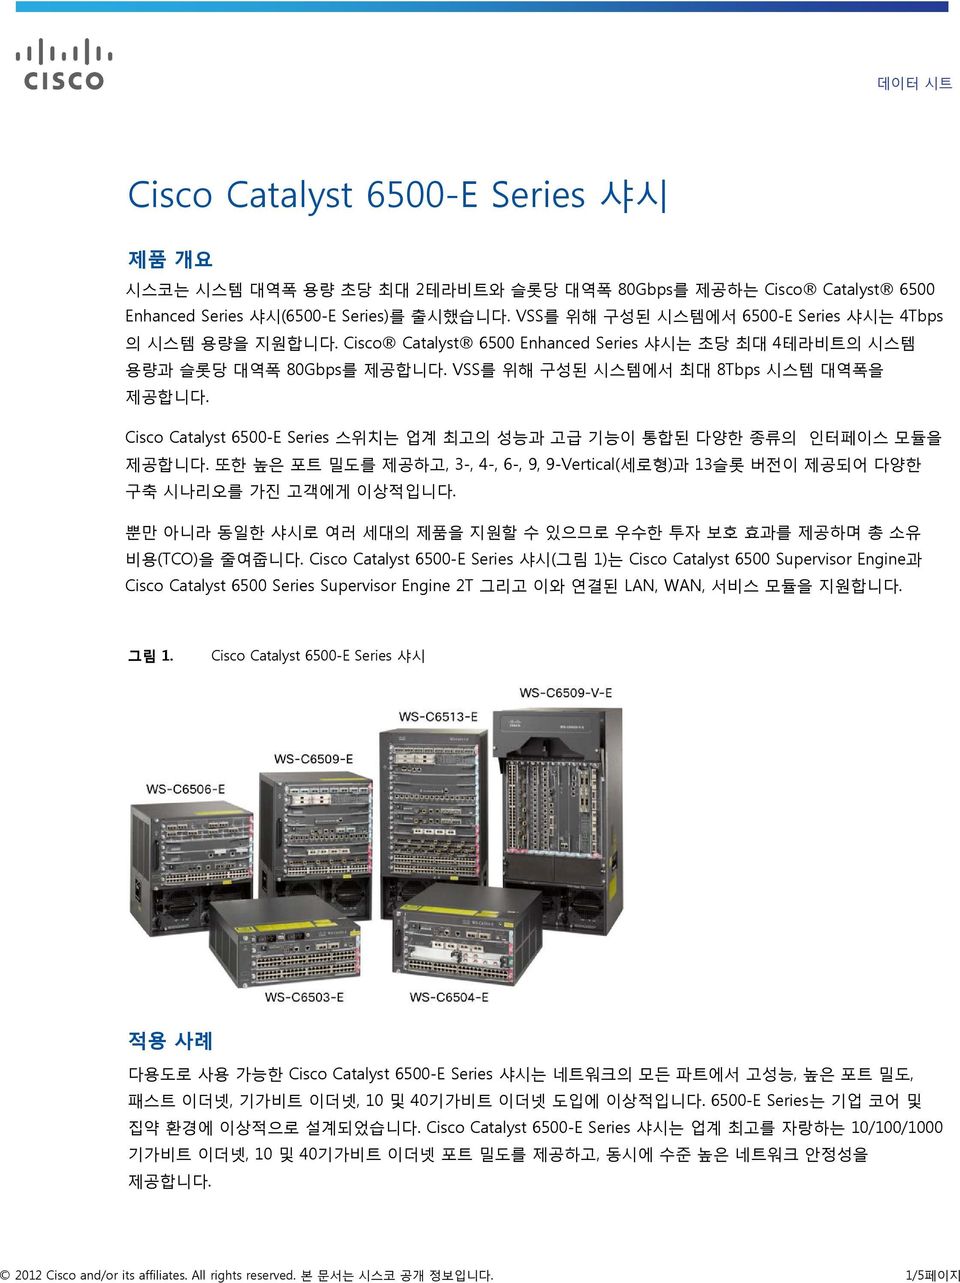 Cisco Catalyst 6500-E Series 스위치는 업계 최고의 성능과 고급 기능이 통합된 다양한 종류의 인터페이스 모듈을 제공합니다. 또한 높은 포트 밀도를 제공하고, 3-, 4-, 6-, 9, 9-Vertical(세로형)과 13슬롯 버전이 제공되어 다양한 구축 시나리오를 가진 고객에게 이상적입니다.